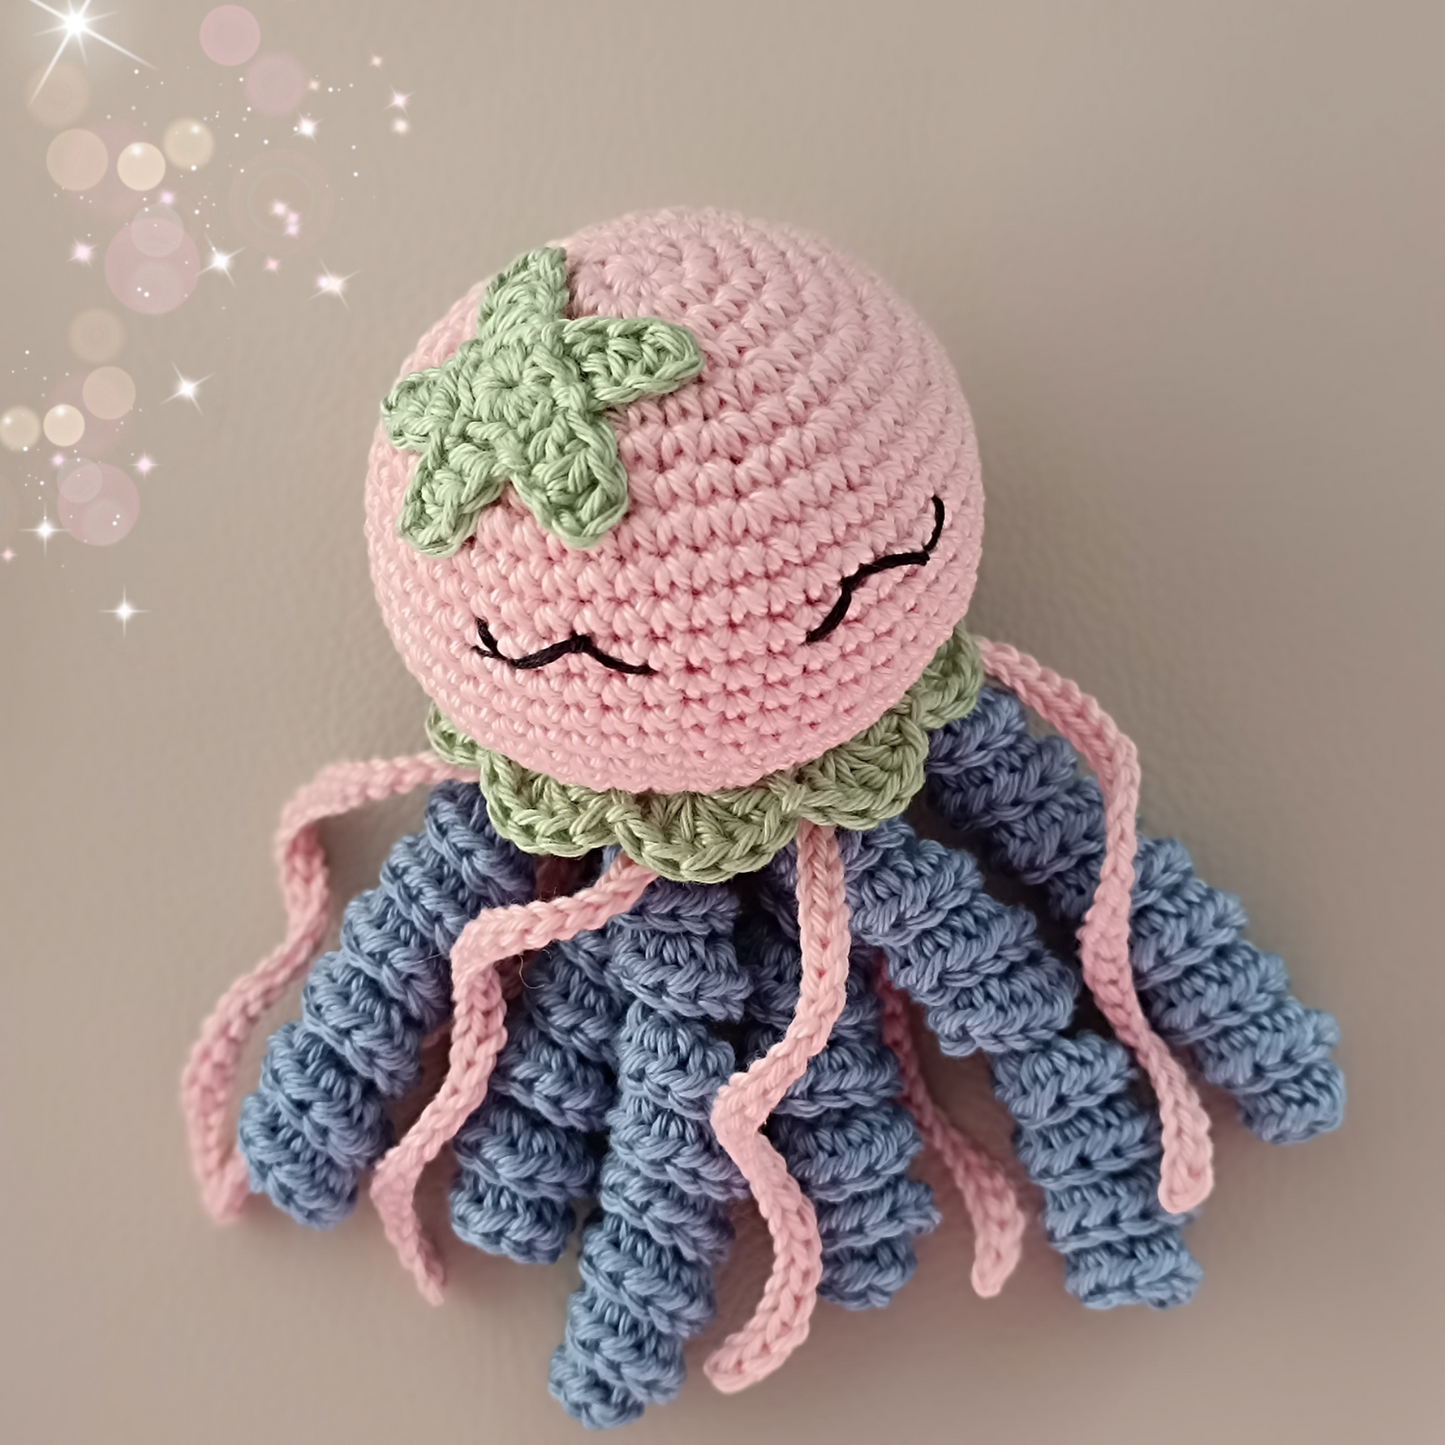 Jullie The Jellyfish Crochet Pattern